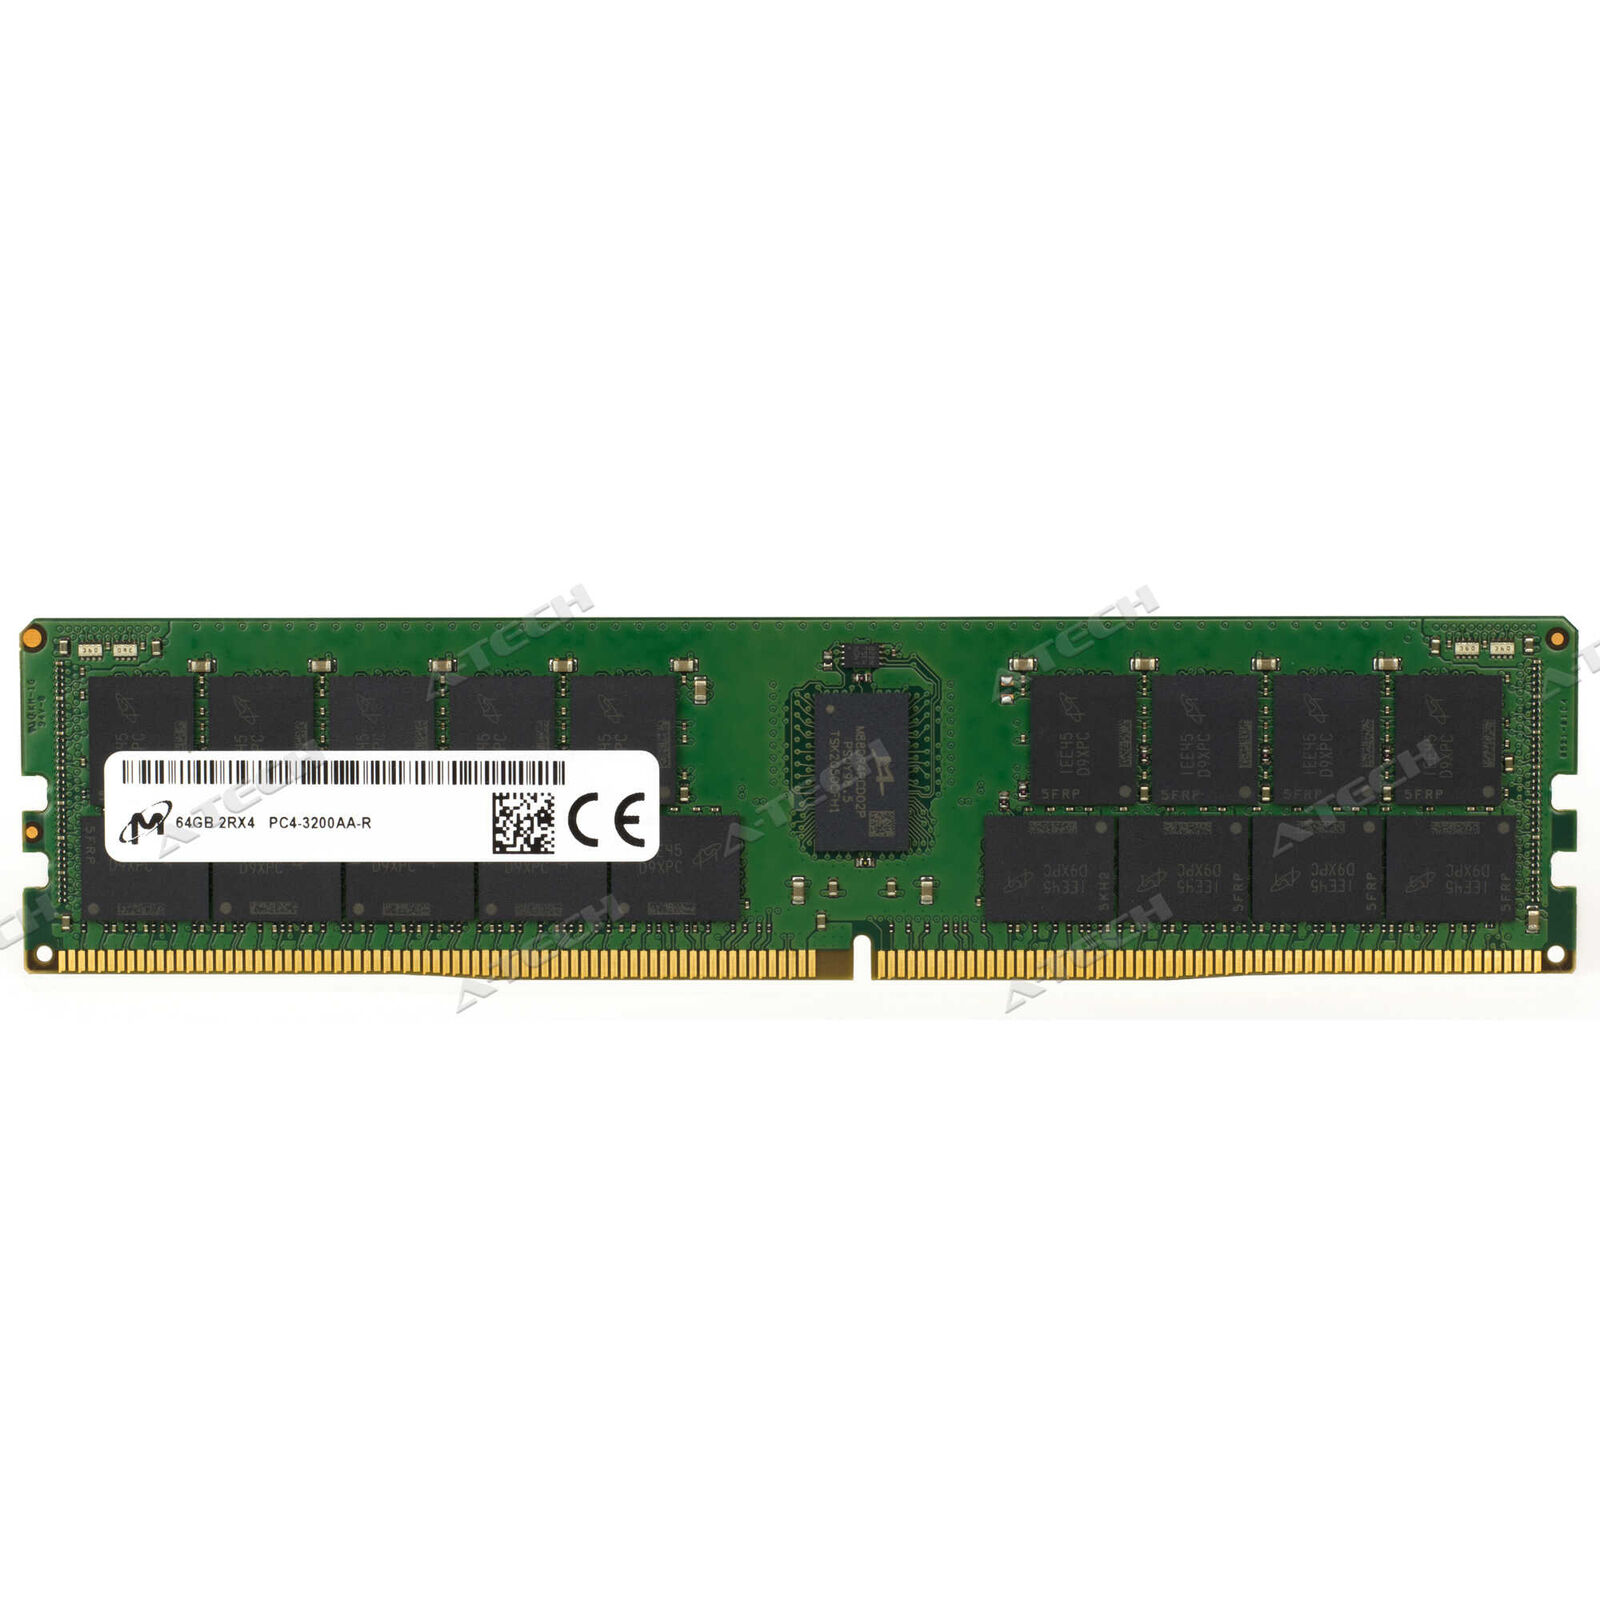 Micron 64GB 2Rx4 PC4-3200 RDIMM DDR4-25600 ECC REG Registered Server Memory RAM